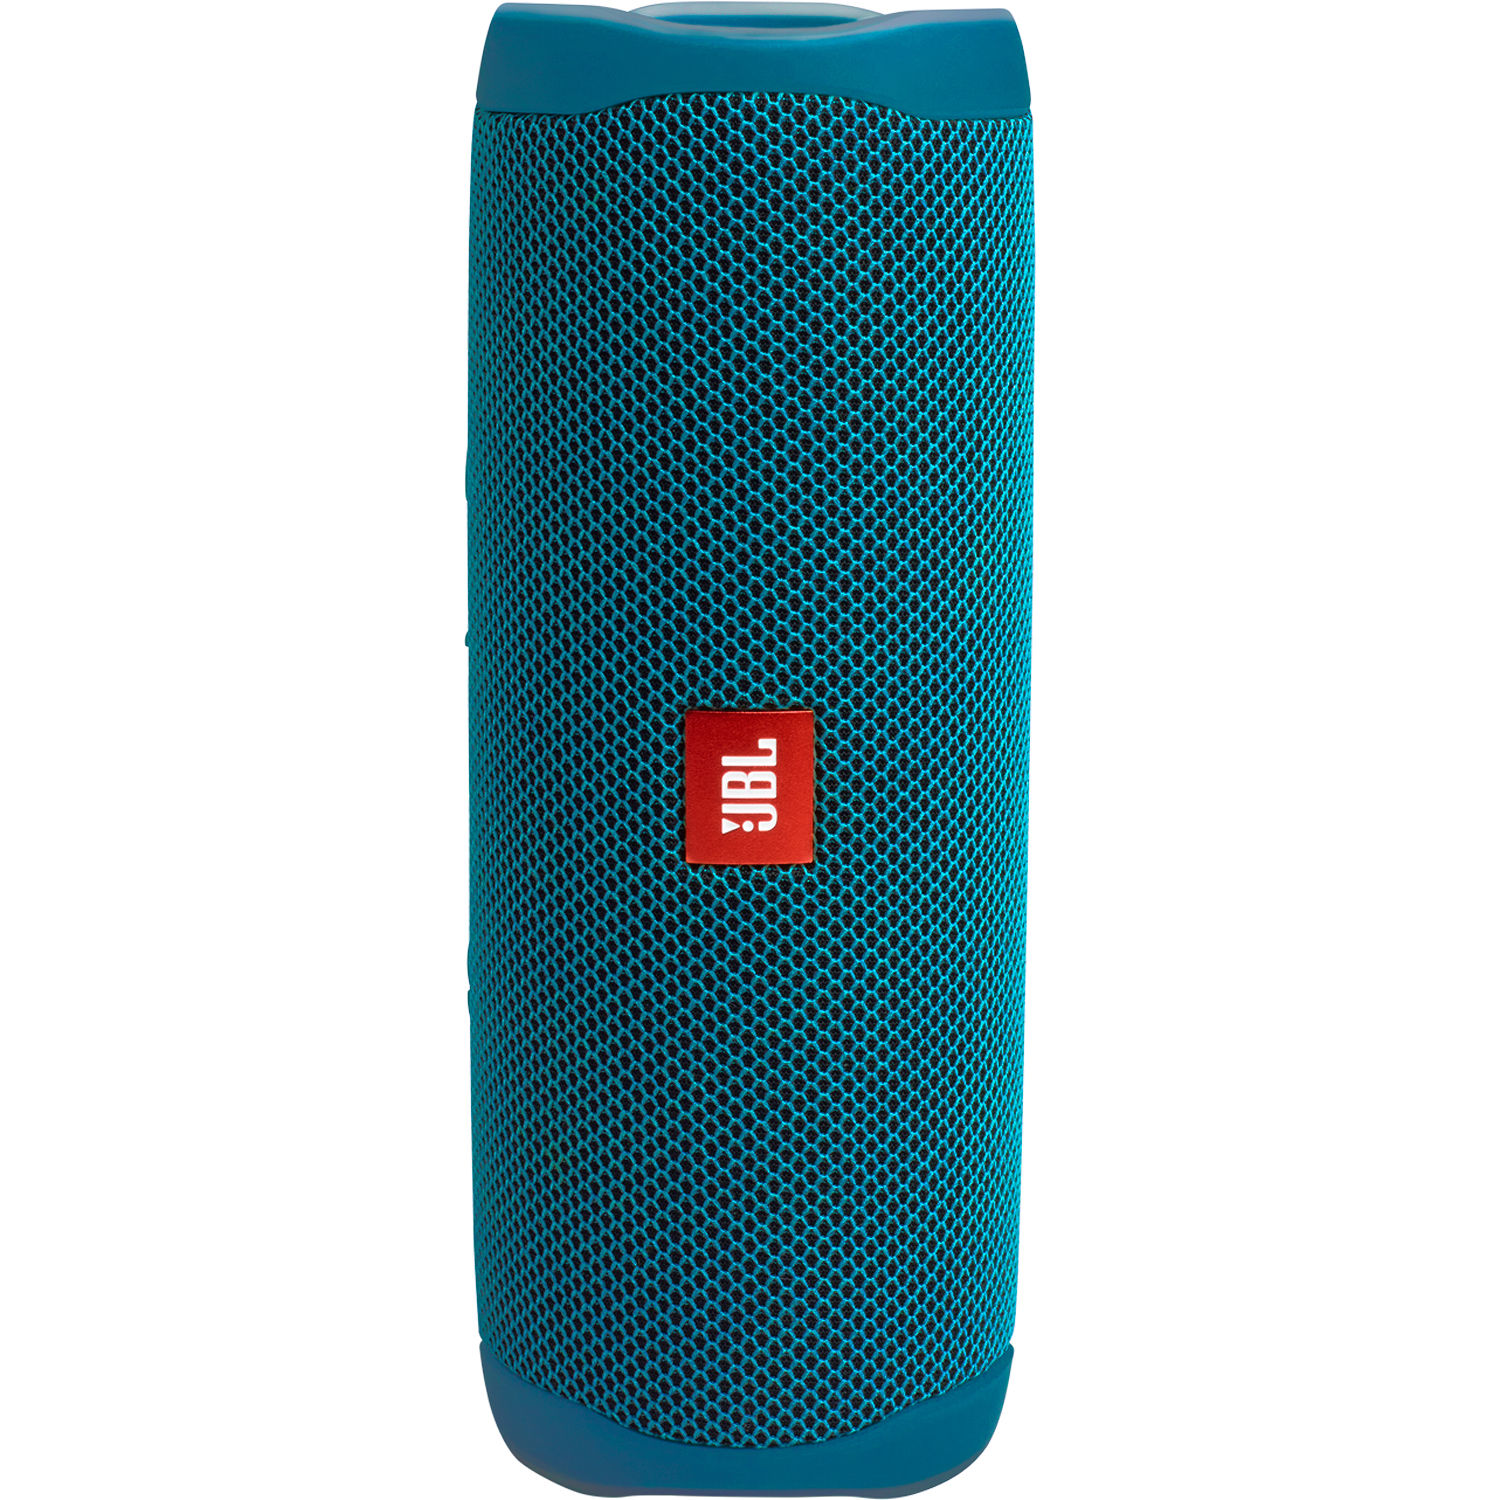 blue jbl bluetooth speaker